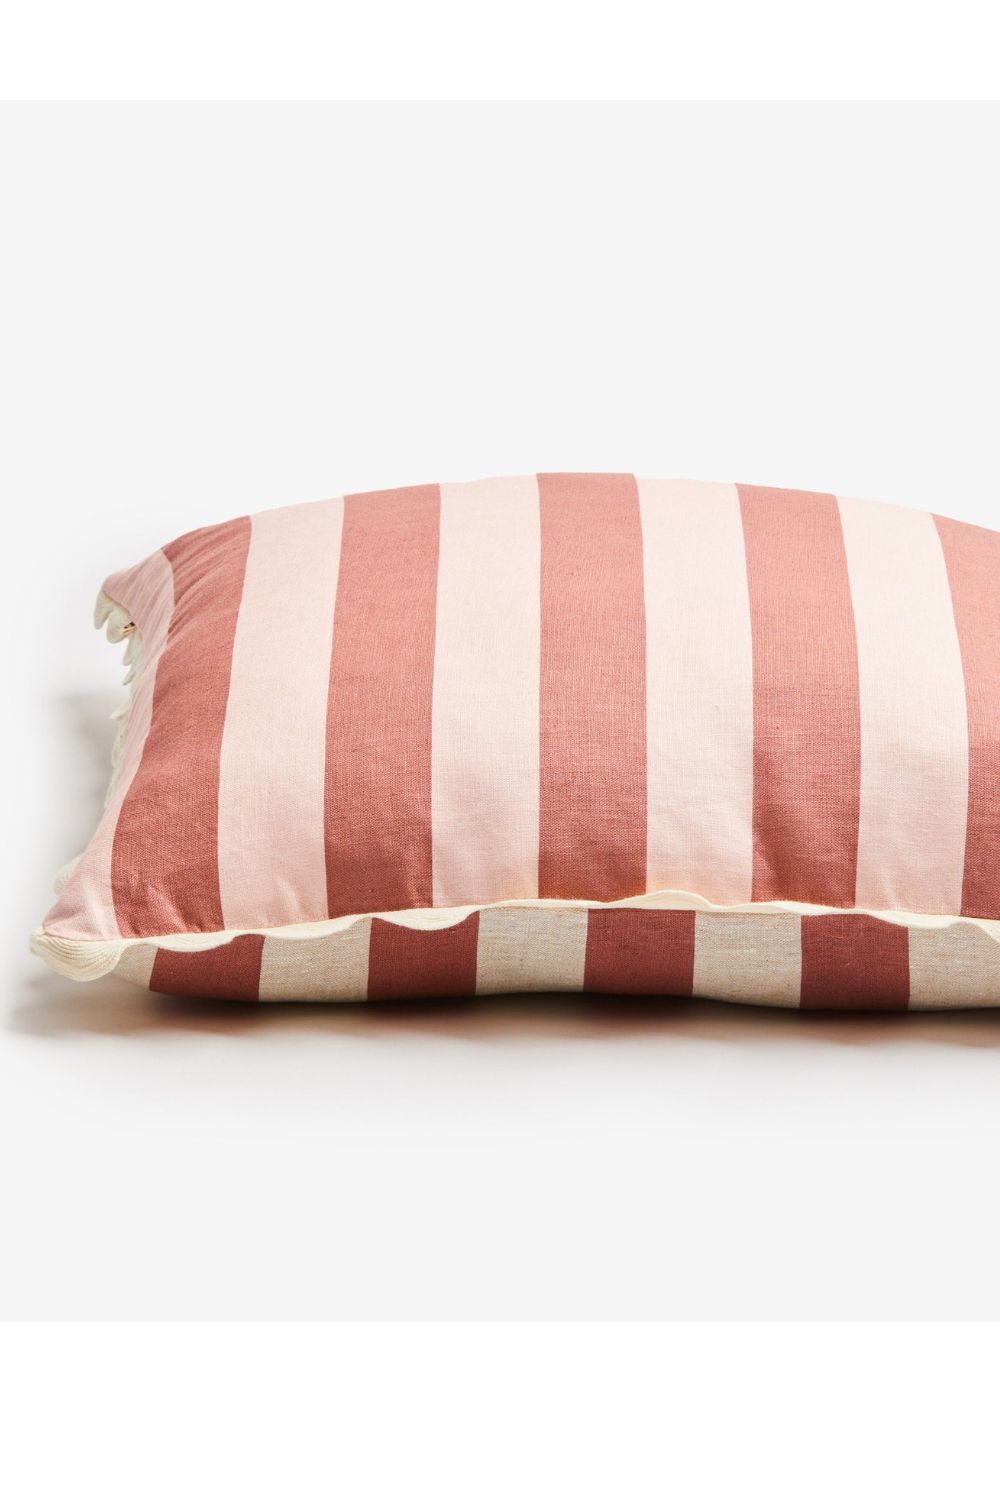 Bonnie & Neil Bold Stripe Berry Pink 60cm Cushion